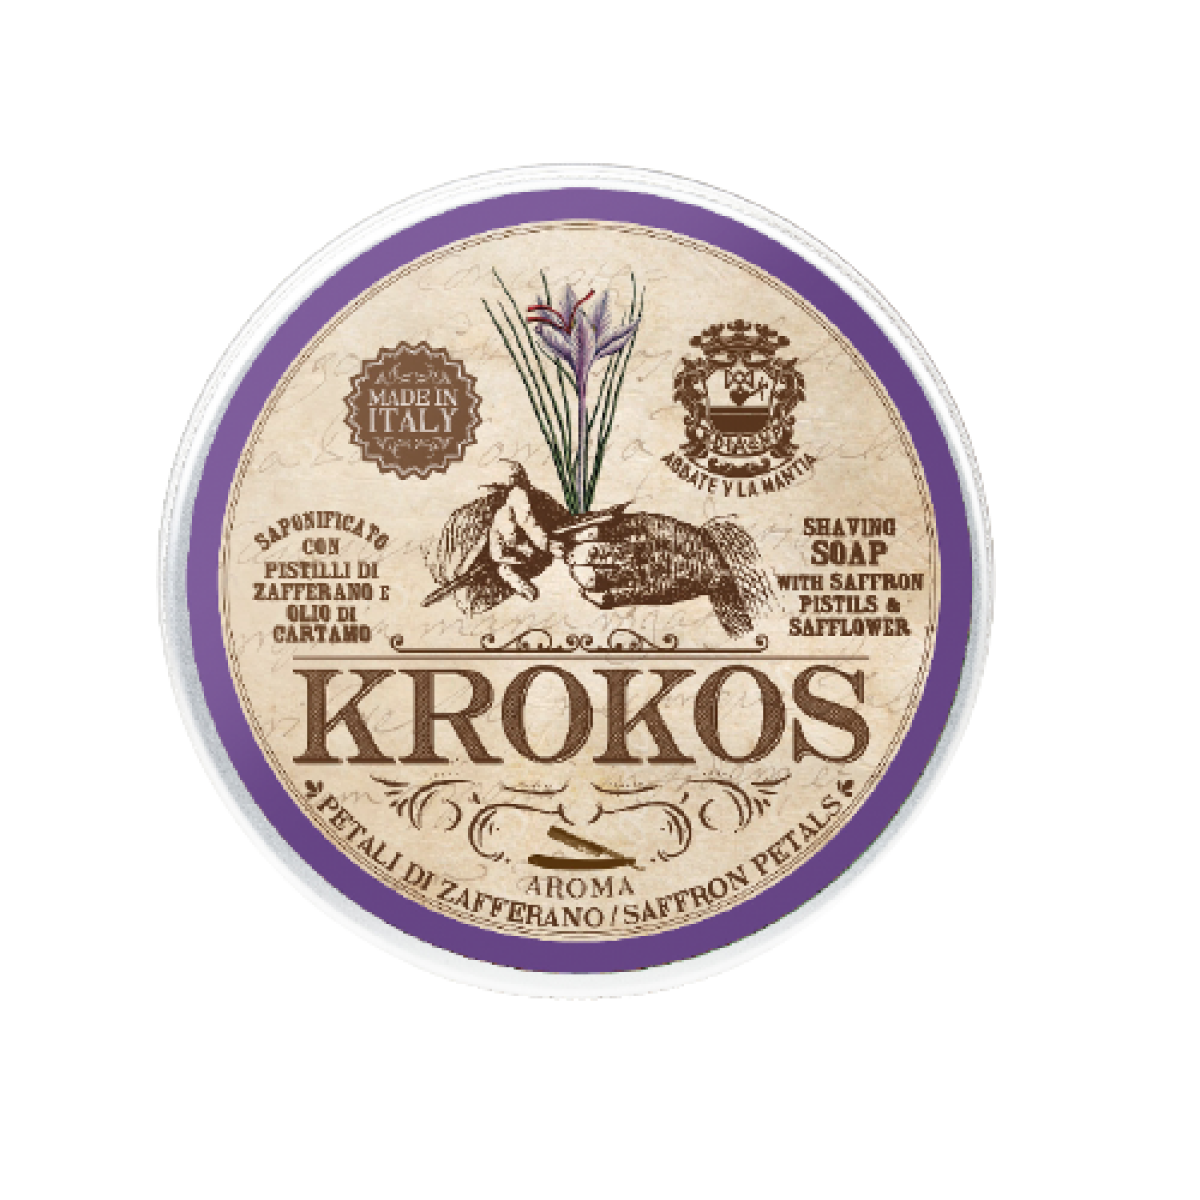 Primary Image of Krokos Shaving Soap